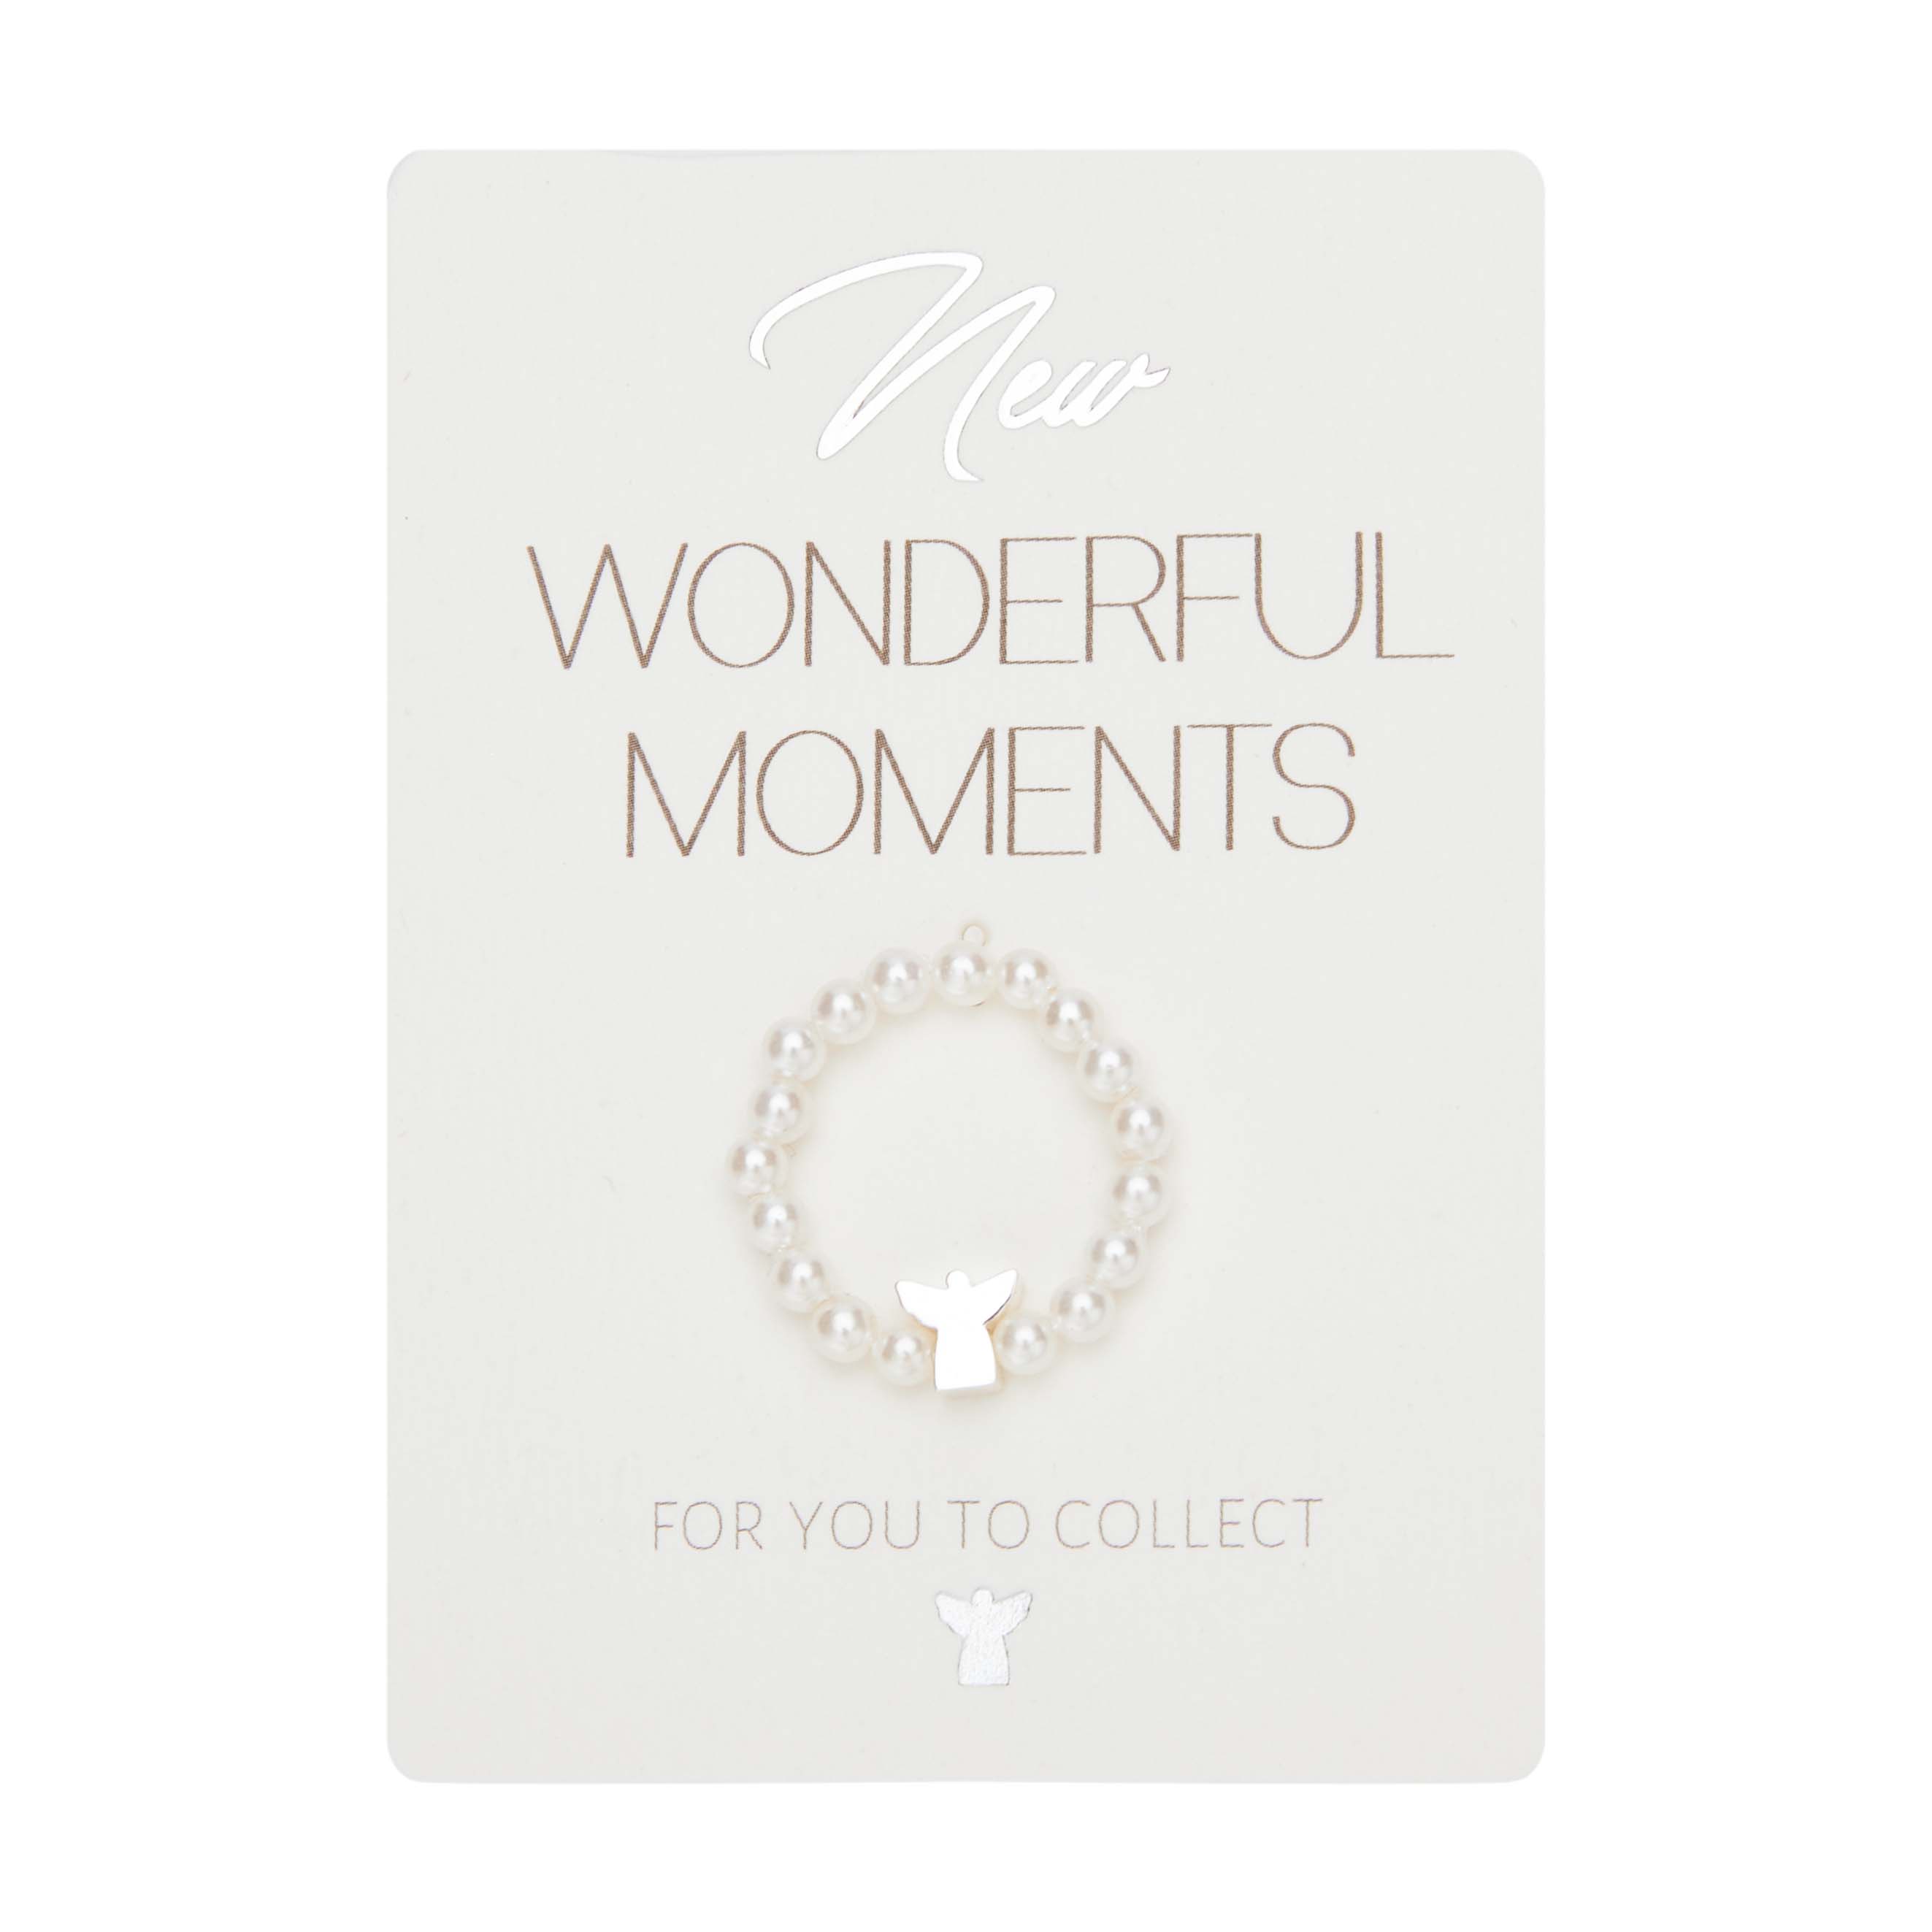 Display rings "New Wonderful Moments"